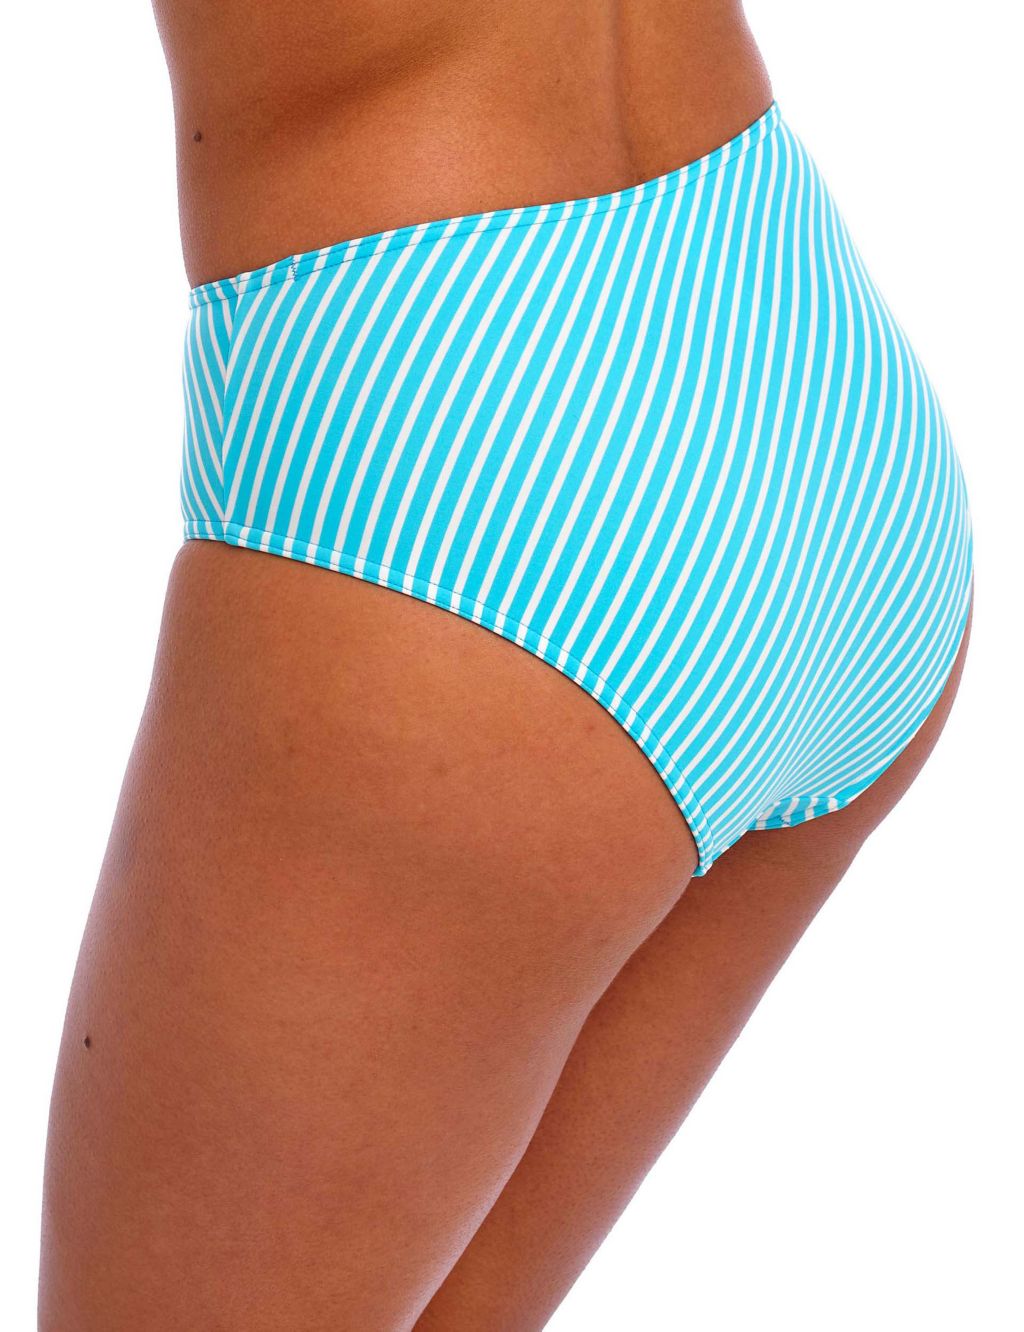 Jewel Cove Striped High Waisted Bikini Bottoms image 5